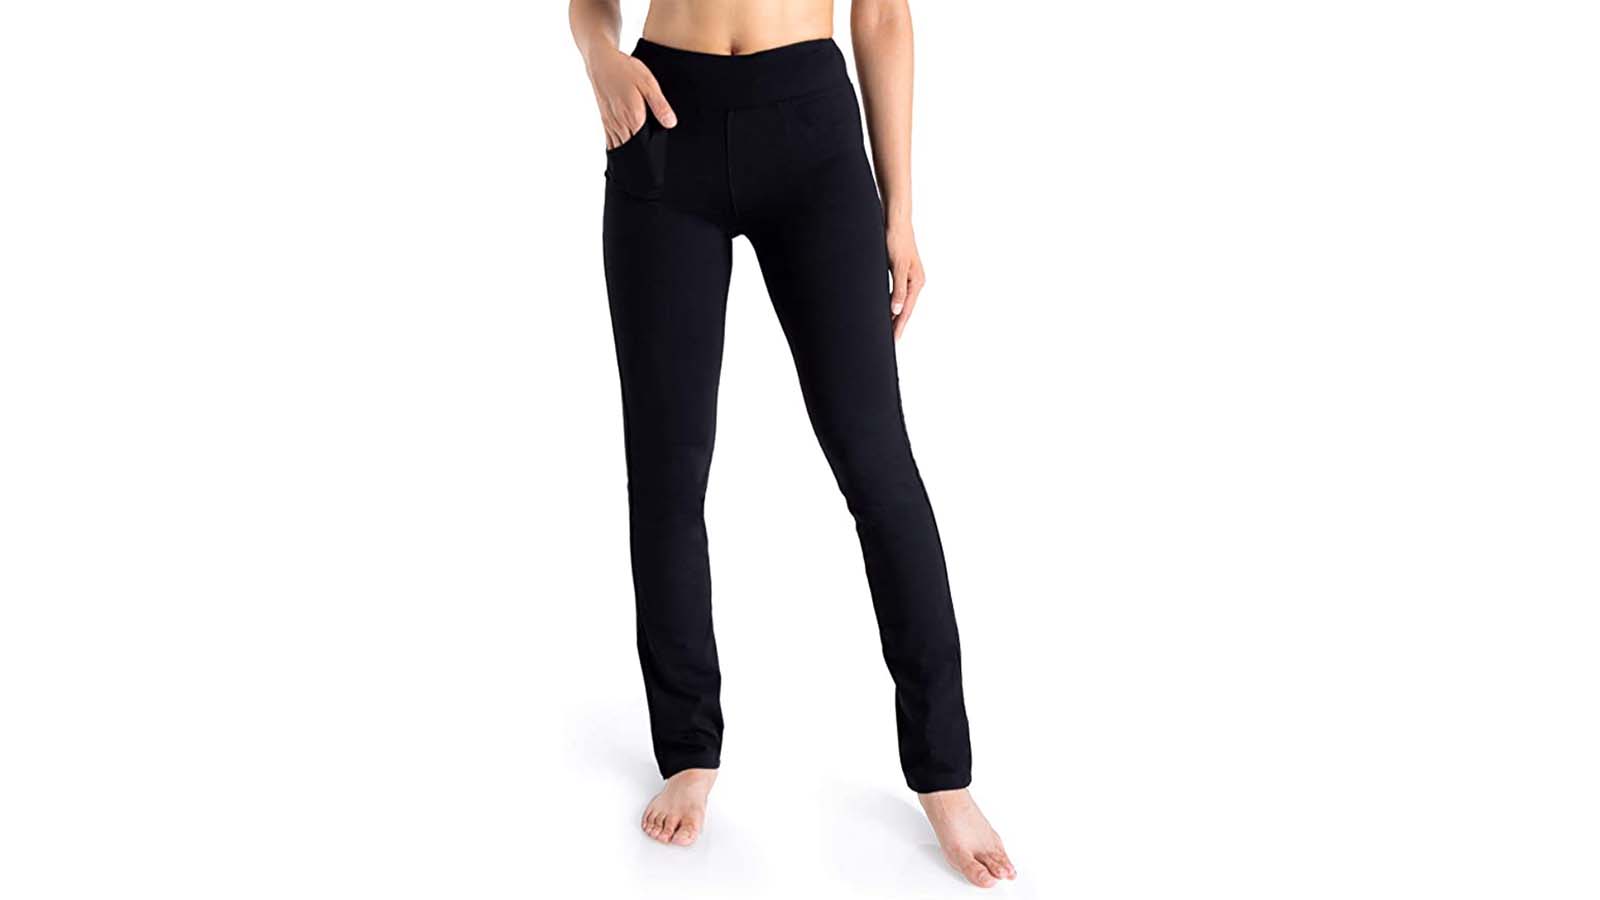 Yogipace Petite 25 Short Inseam,Women's Water Resistant Fleece Lined Yoga  Pant